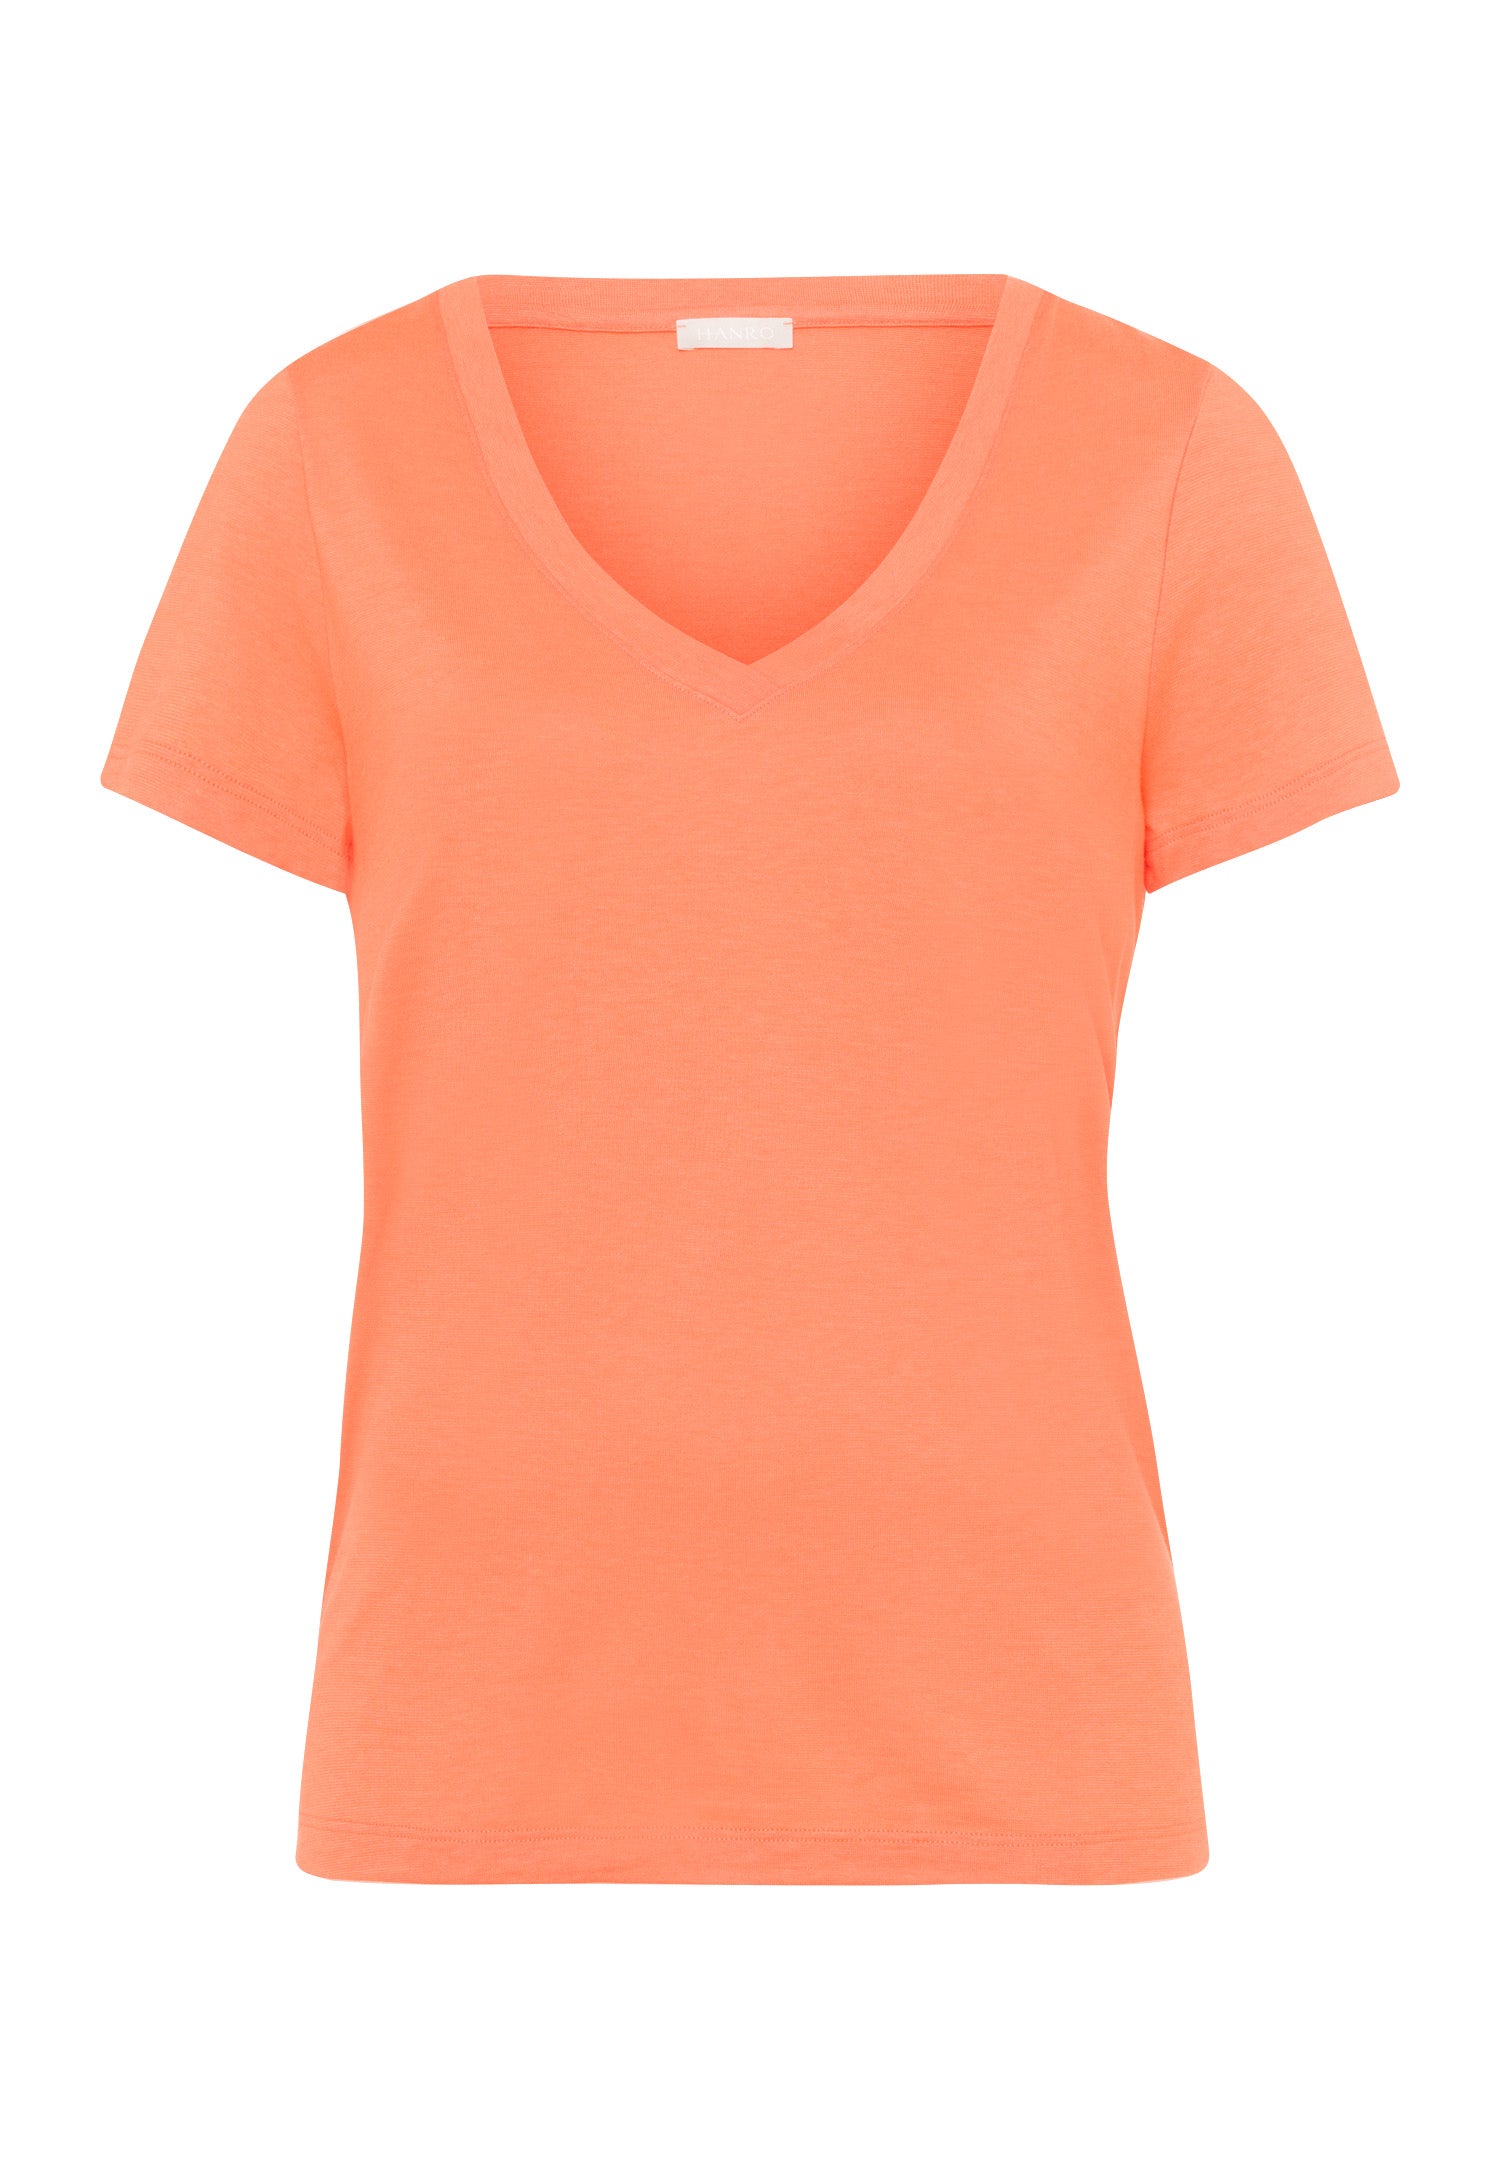 77876 Sleep And Lounge Short Sleeve Shirt - 1291 Flamingo